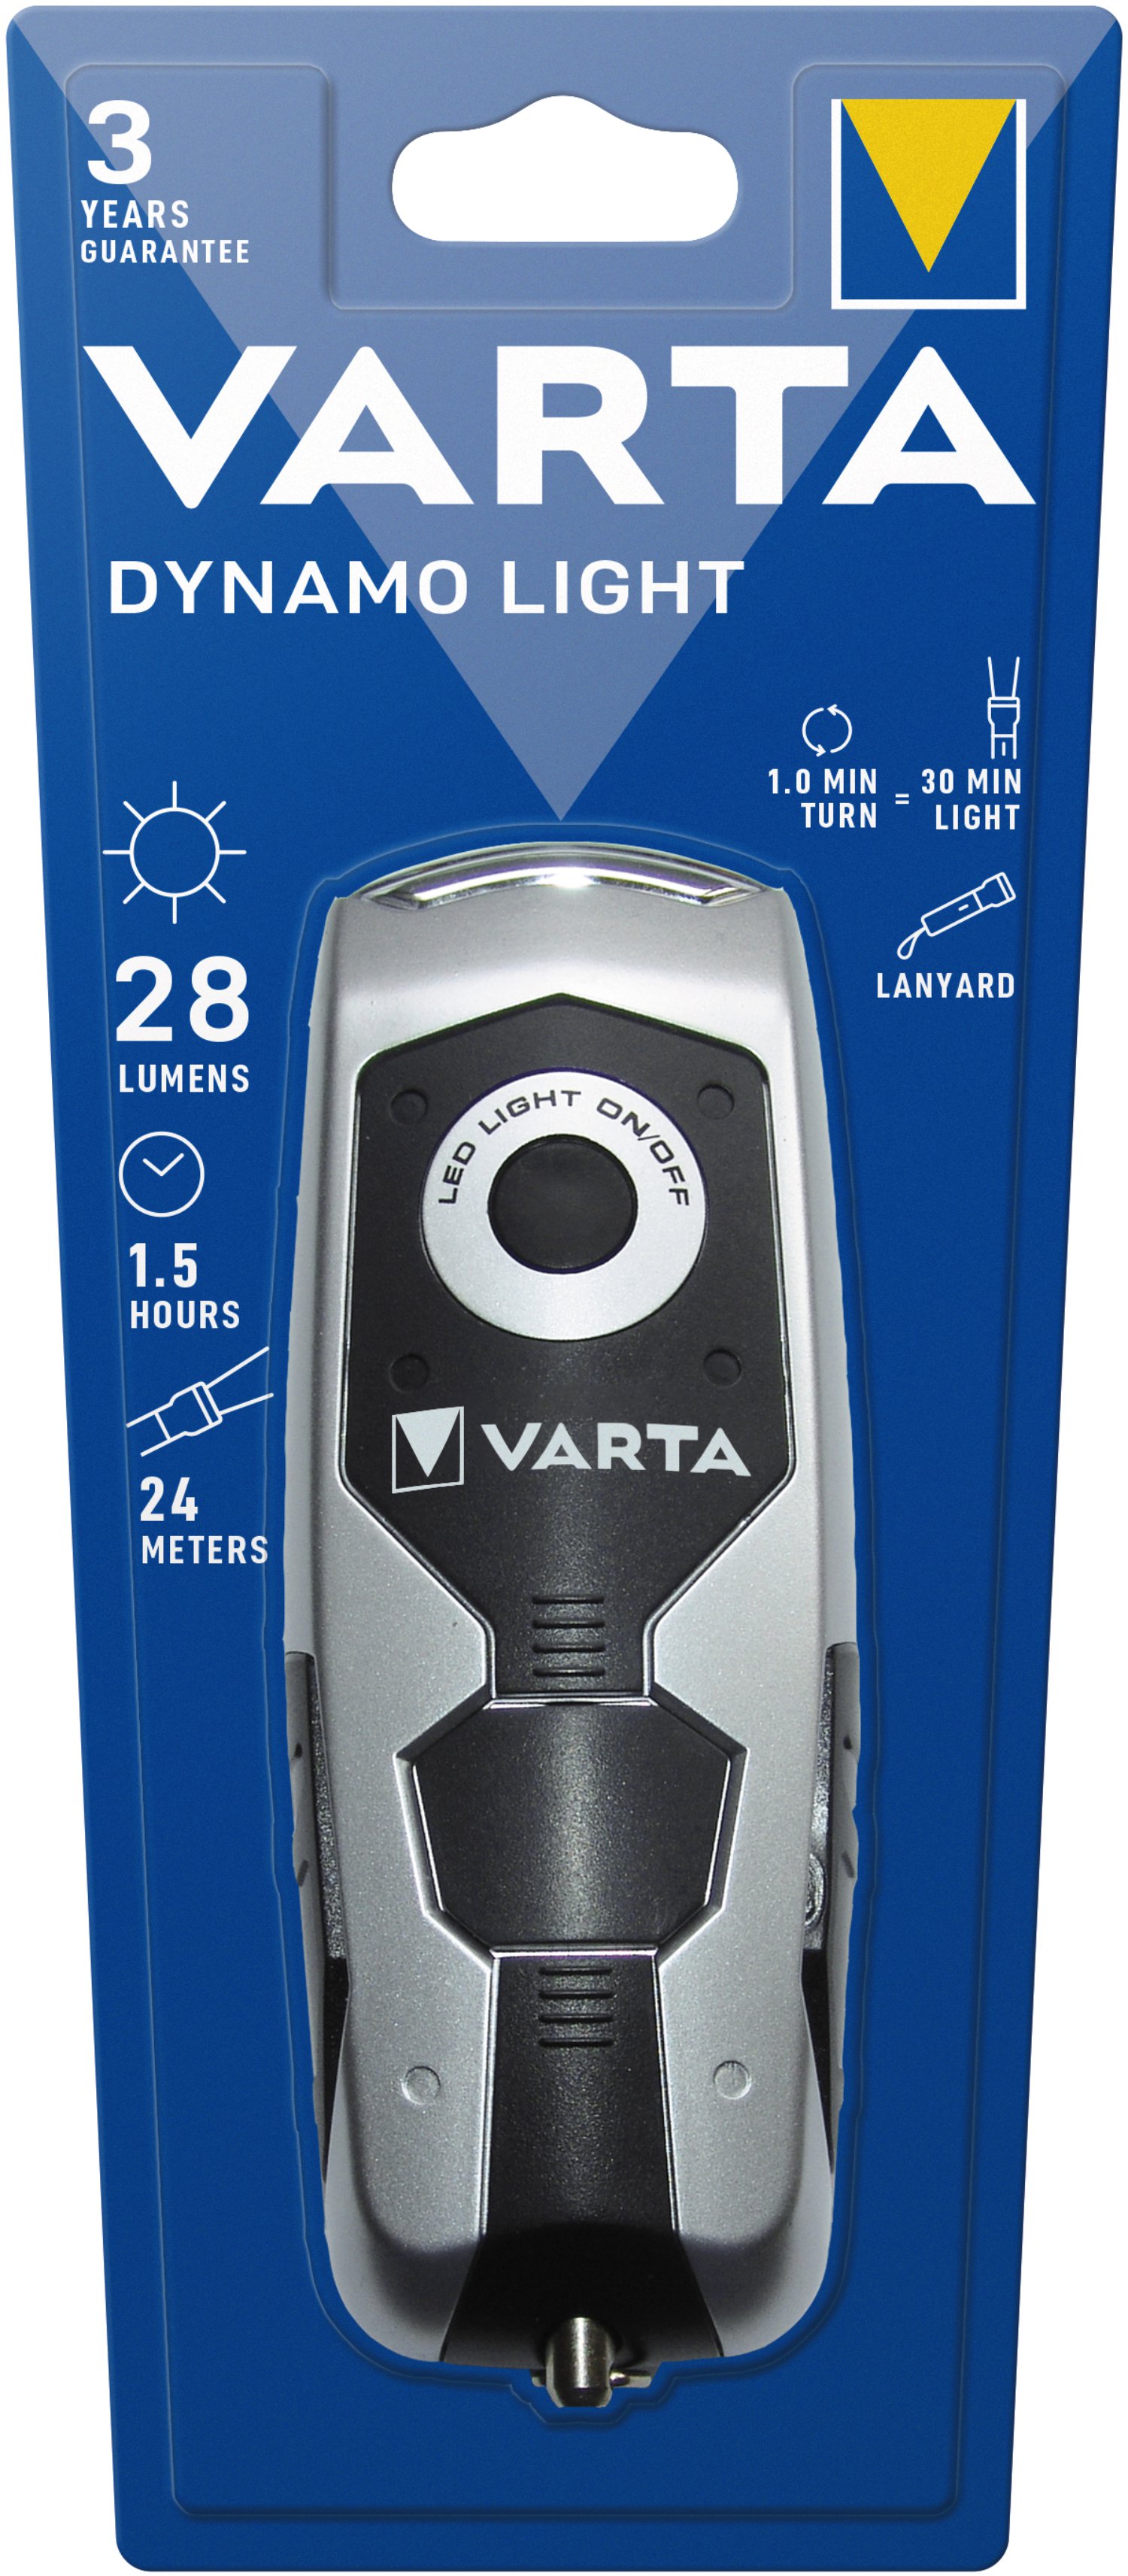 VARTA LED-Taschenlampe Dynamo Light mit Handkurbel